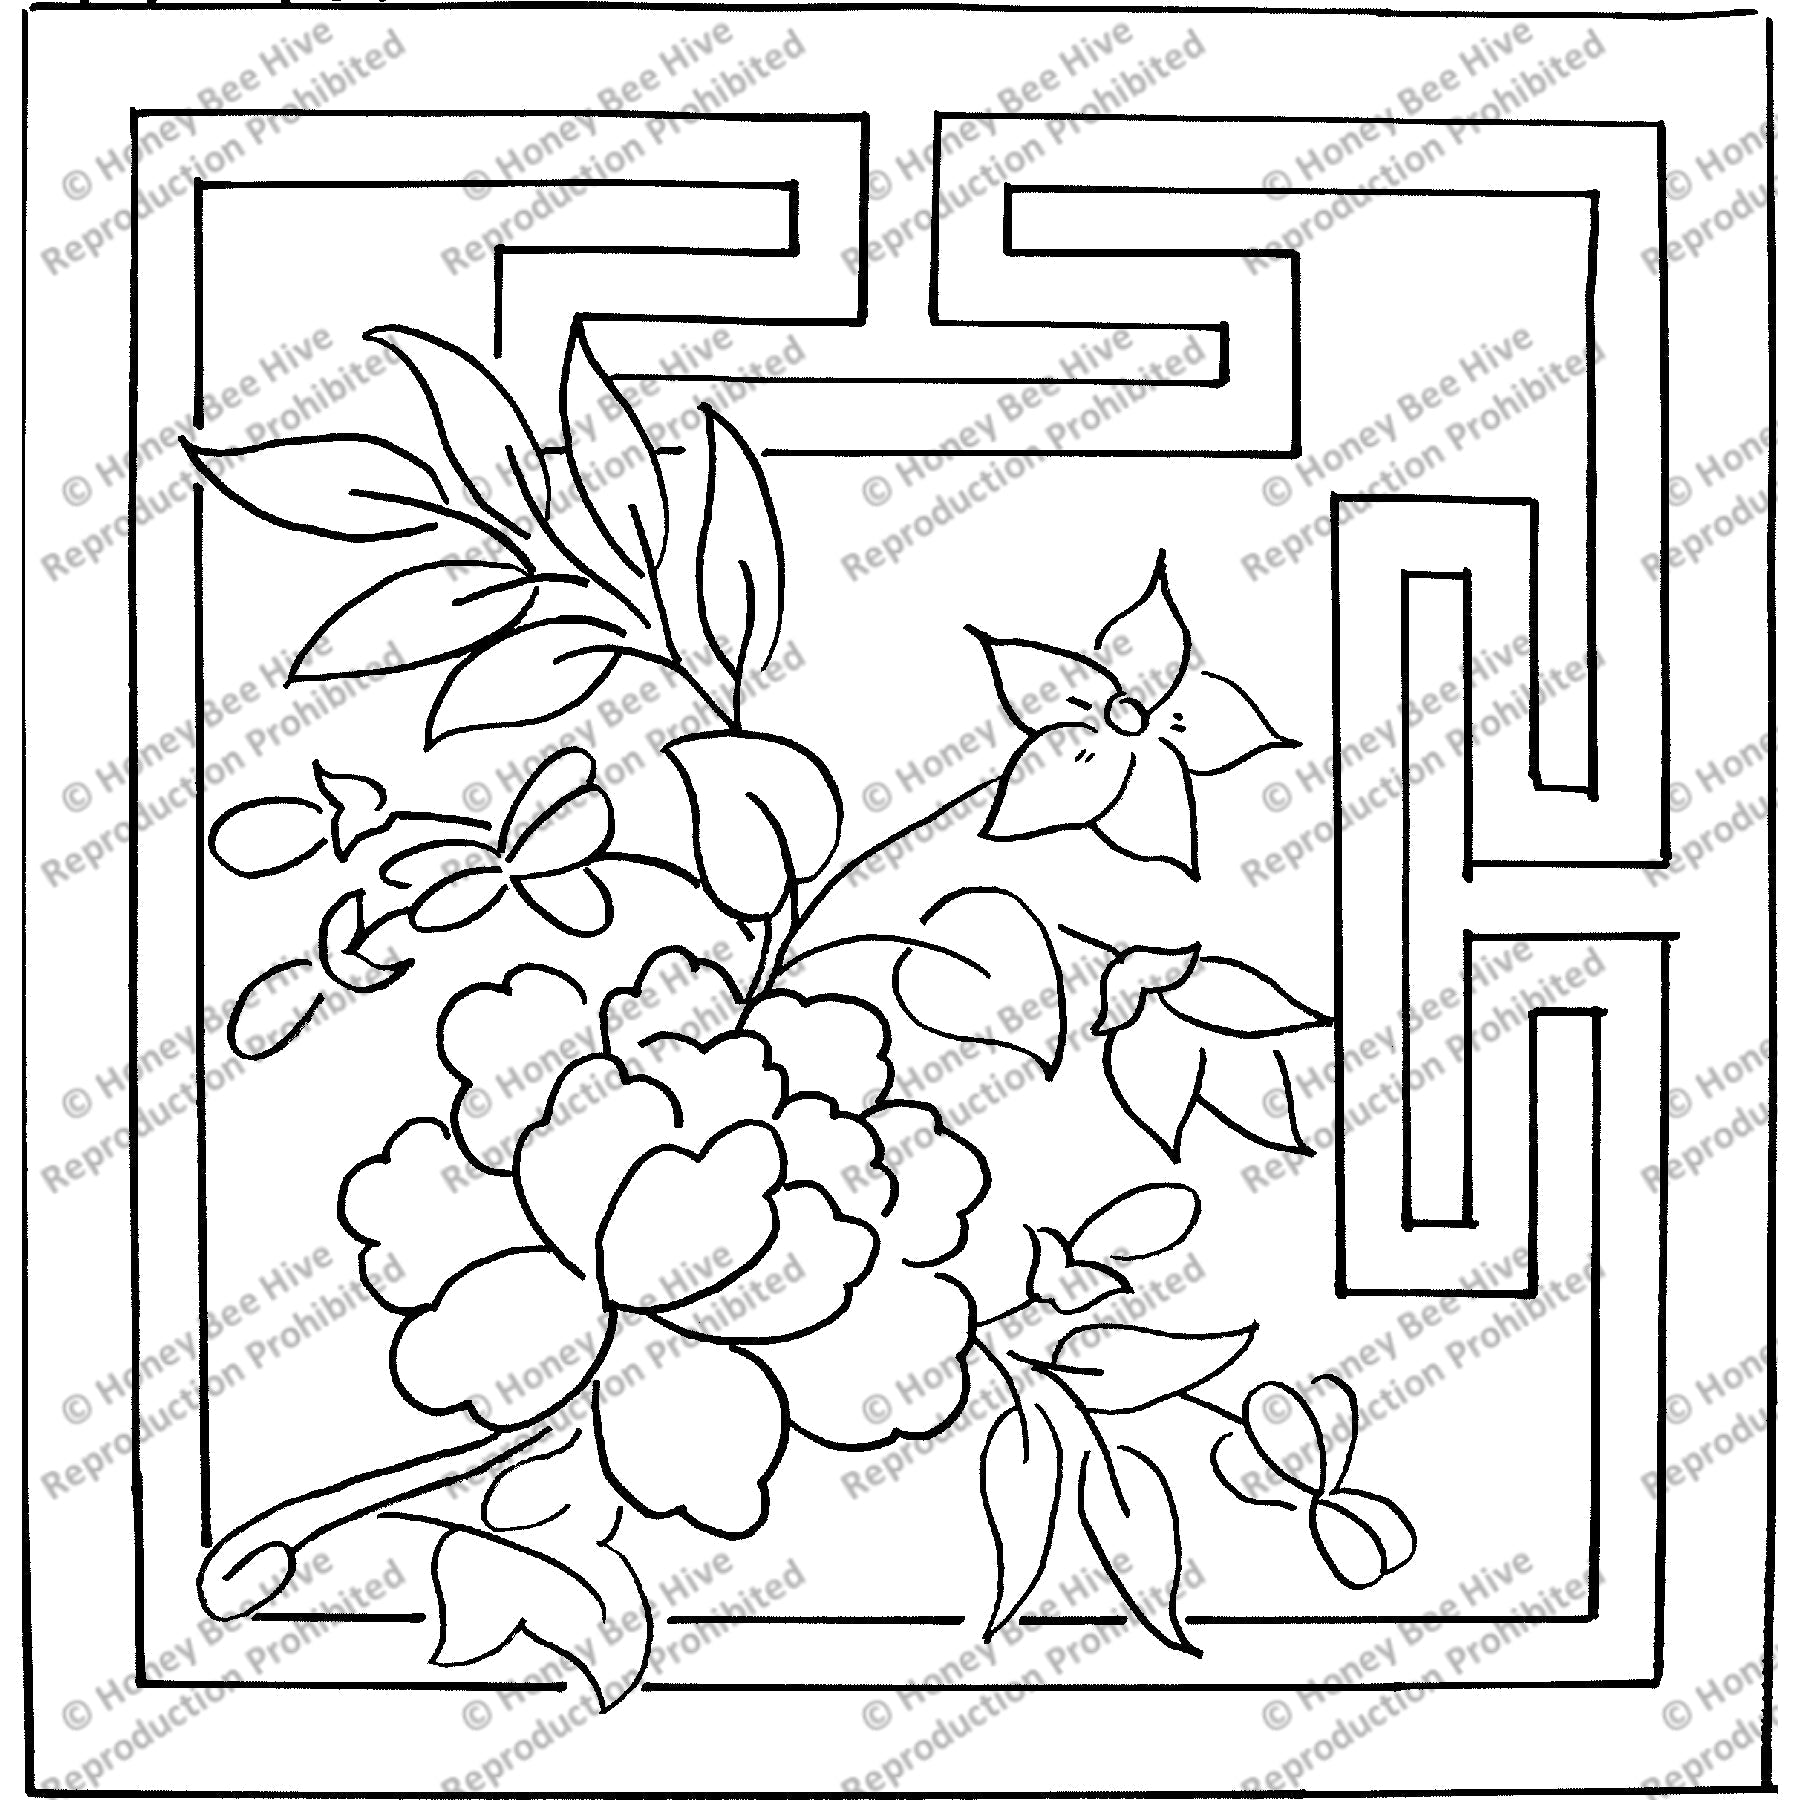 Mandarin Riches, rug hooking pattern